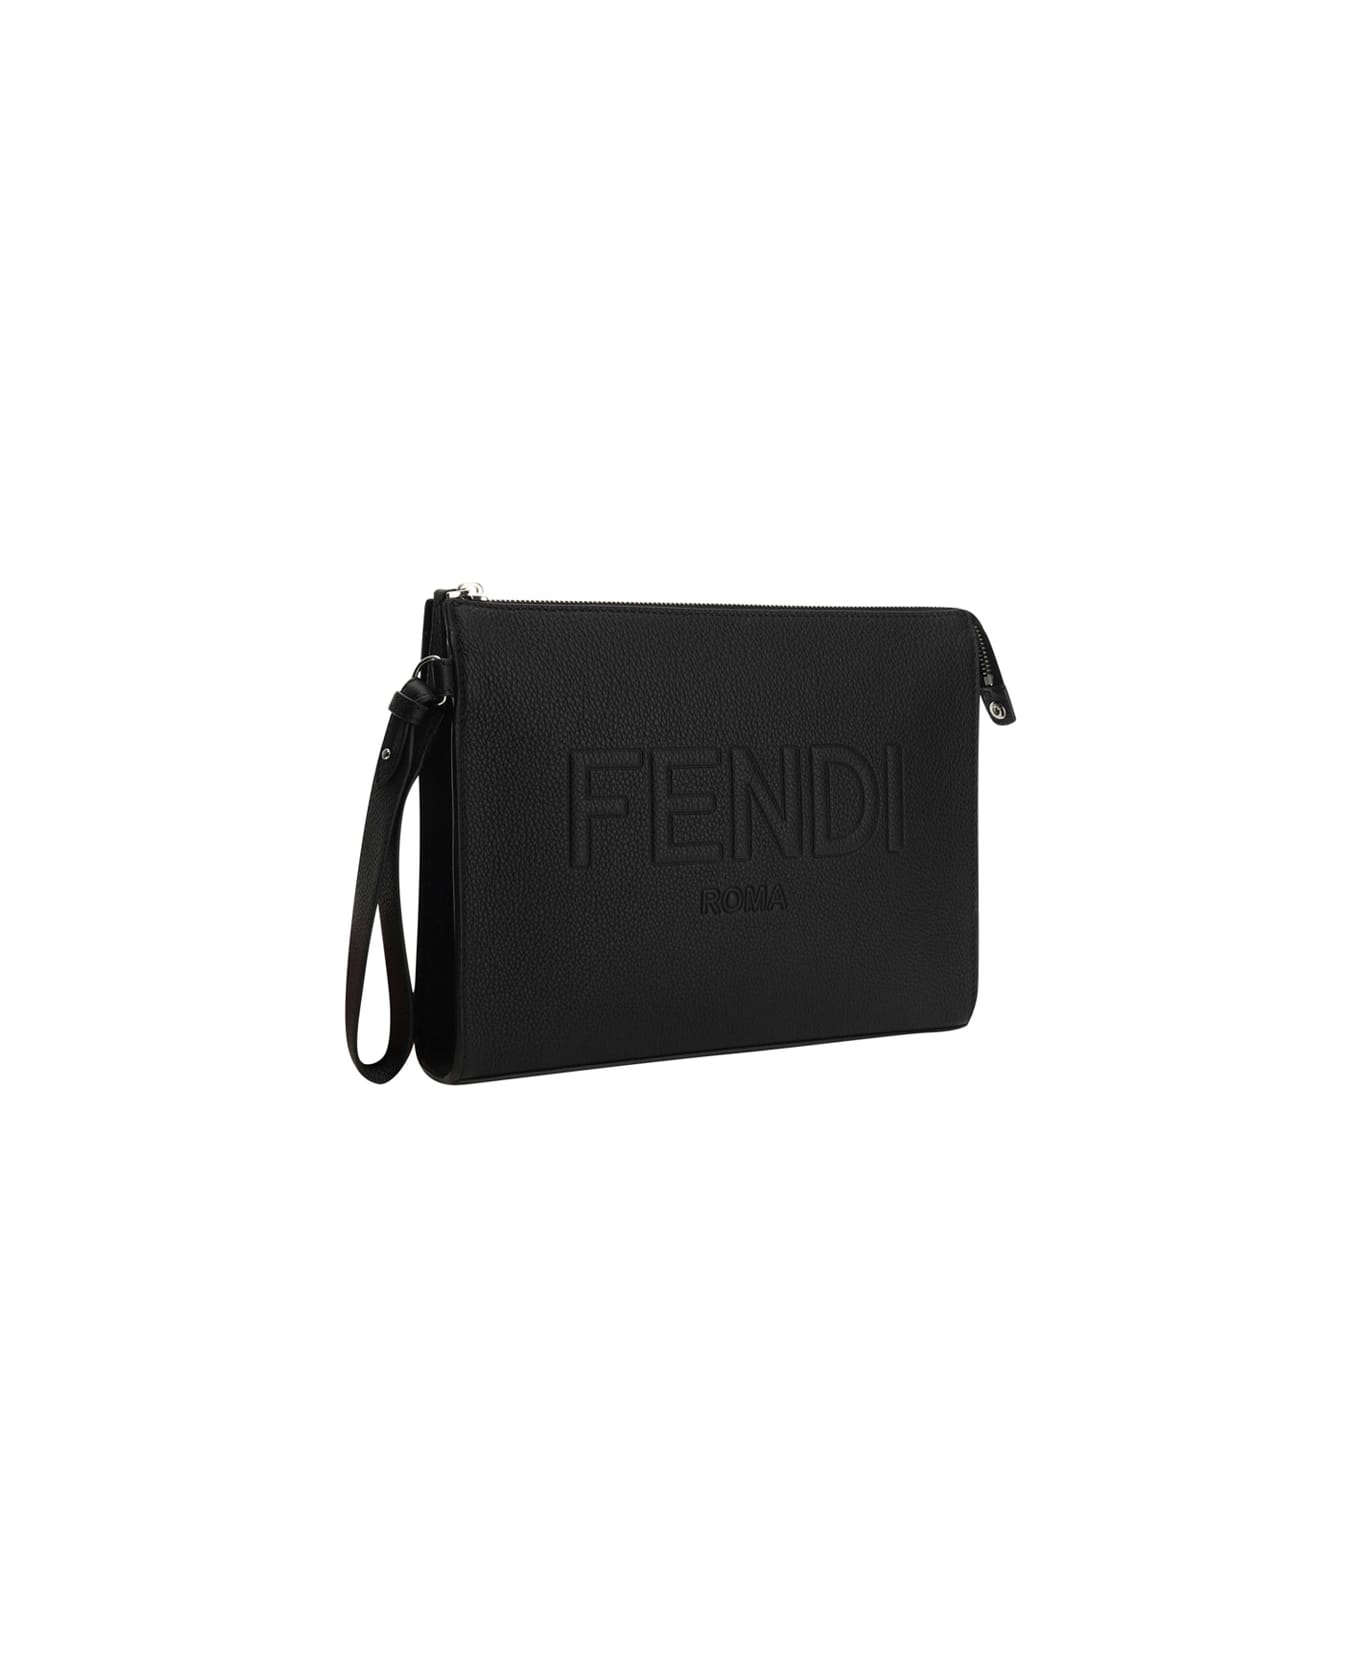 Fendi Black Leather Pouch - Nero+palladio トラベルバッグ